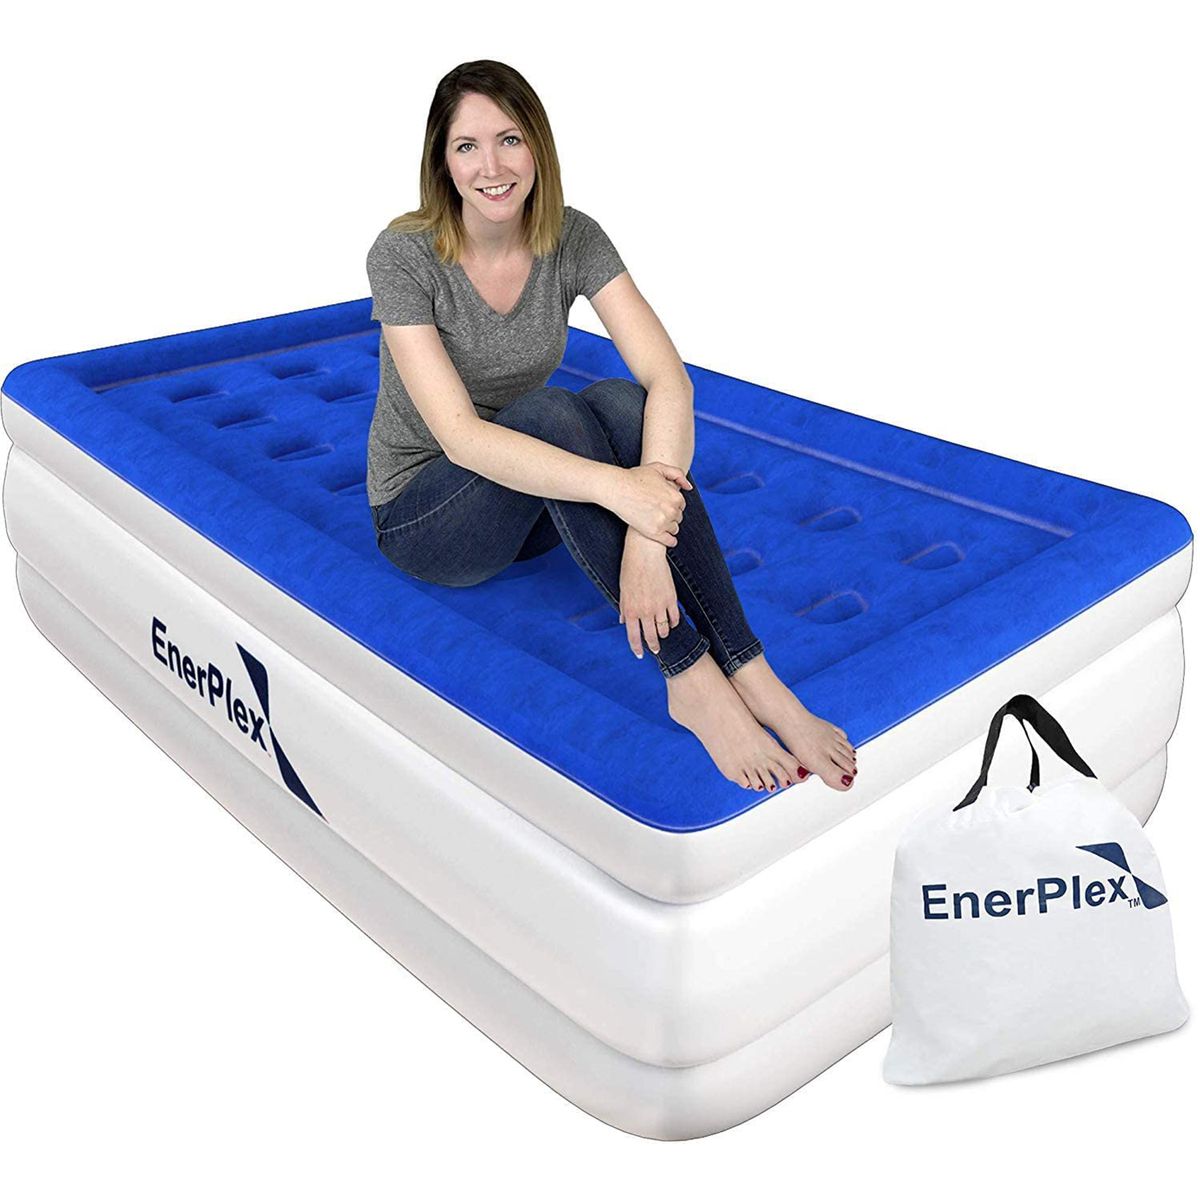 EnerPlex air mattress